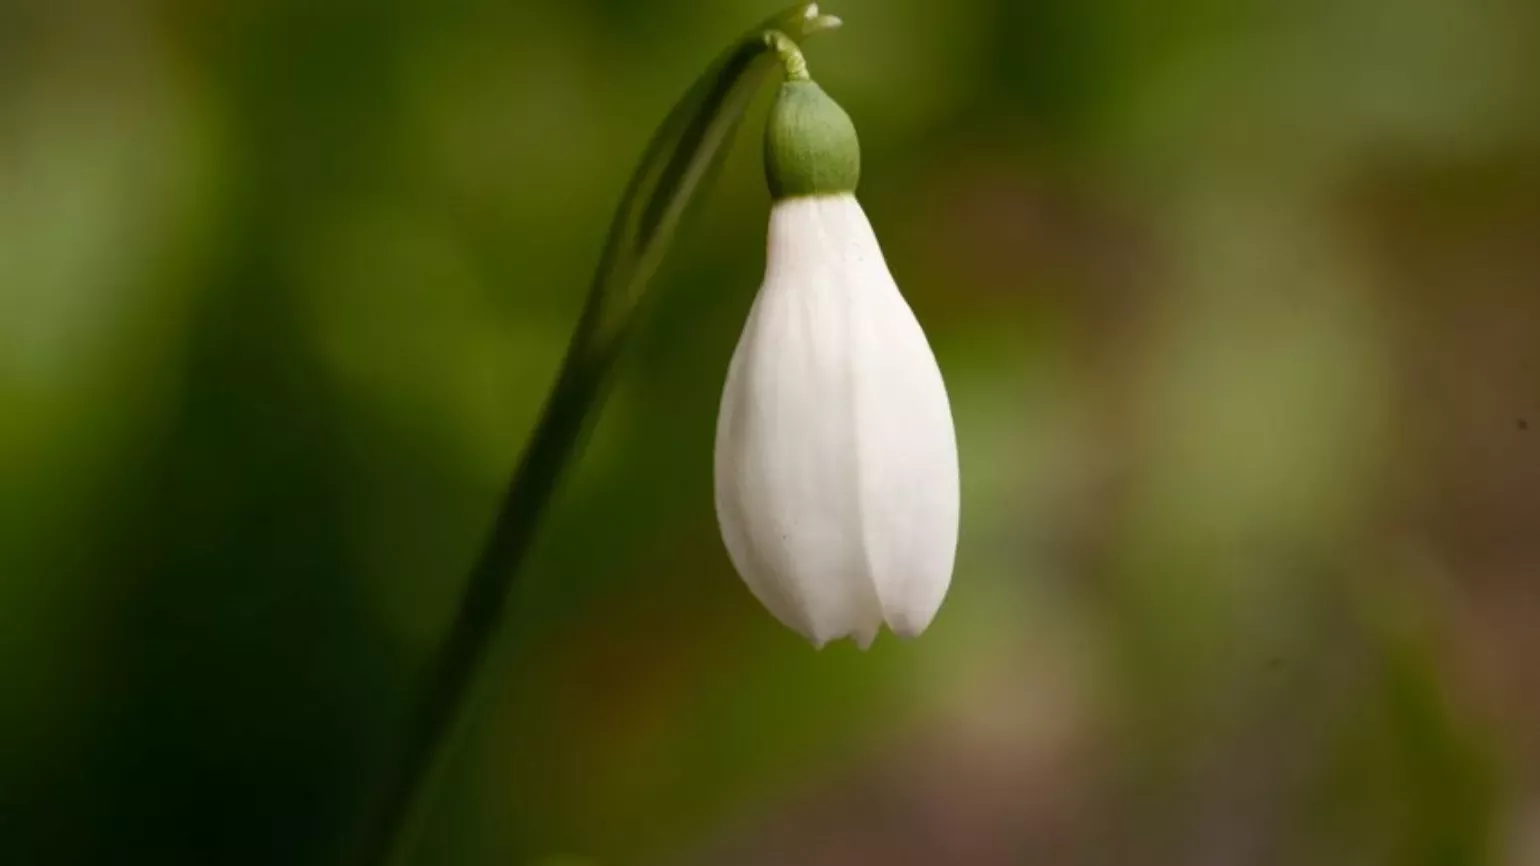 Nodding, white flowers of the common snowdrop